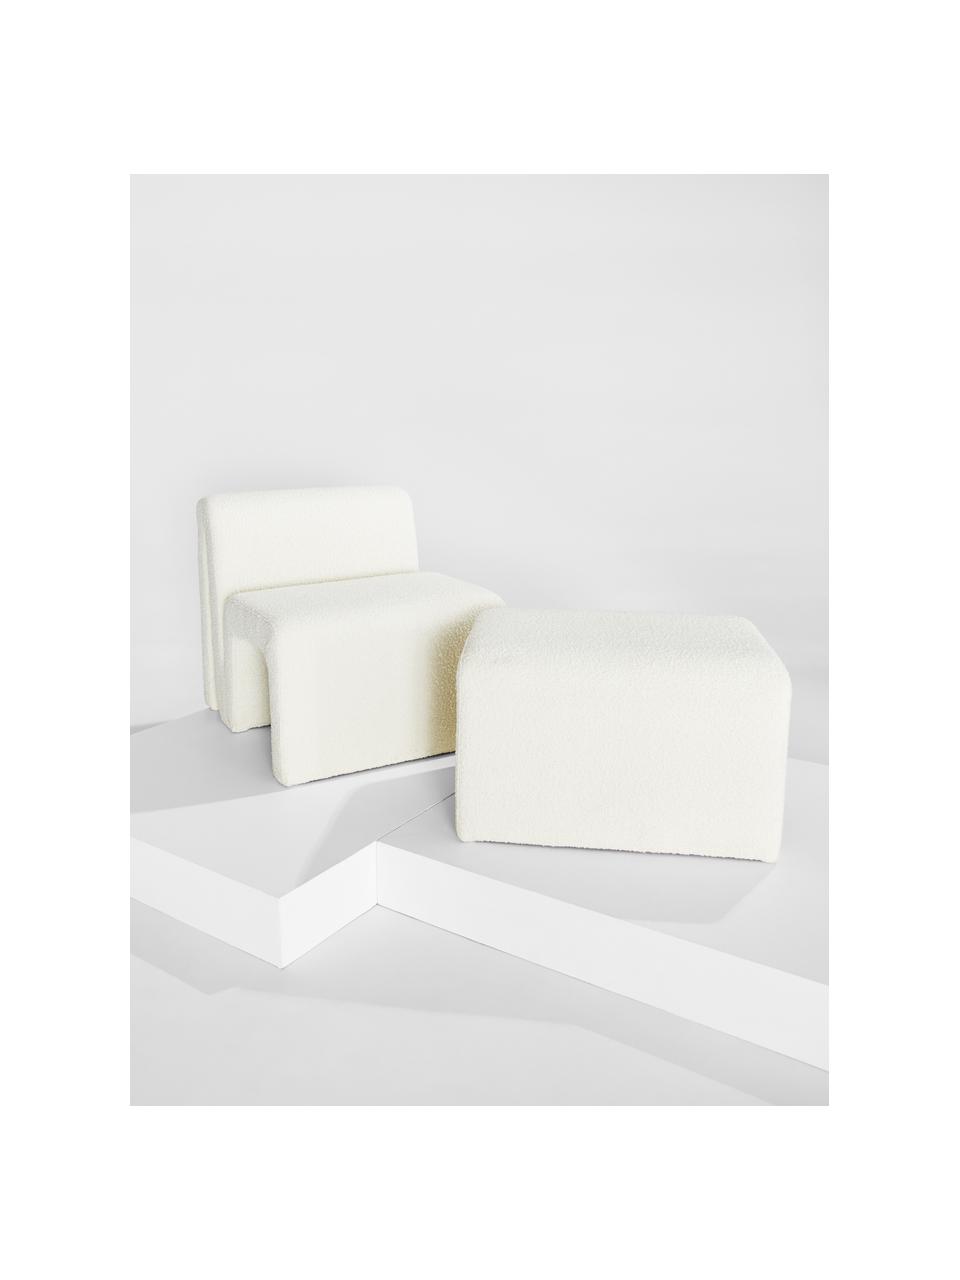 Chaise longue in tessuto bouclé bianco Odette, Rivestimento: 95% poliestere (Bouclé), , Struttura: legno di pino, compensato, Bouclé bianco, Larg. 70 x Prof. 76 cm